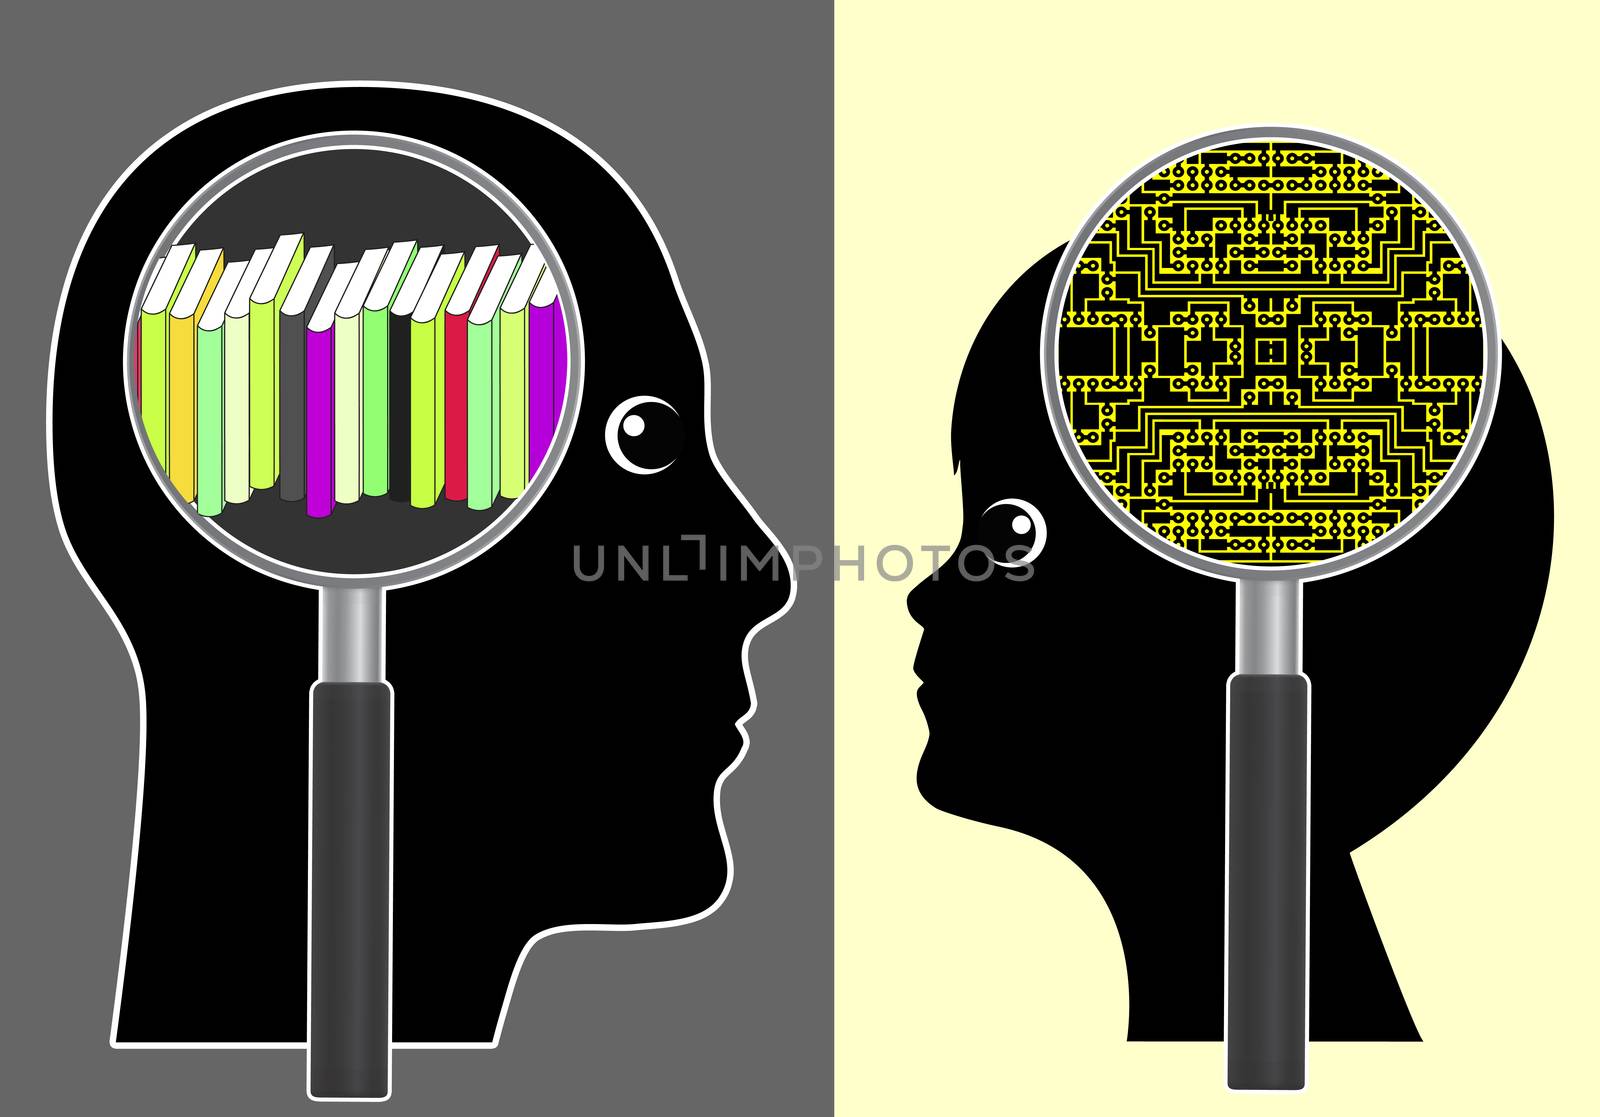 Analog versus Digital Brain by Bambara